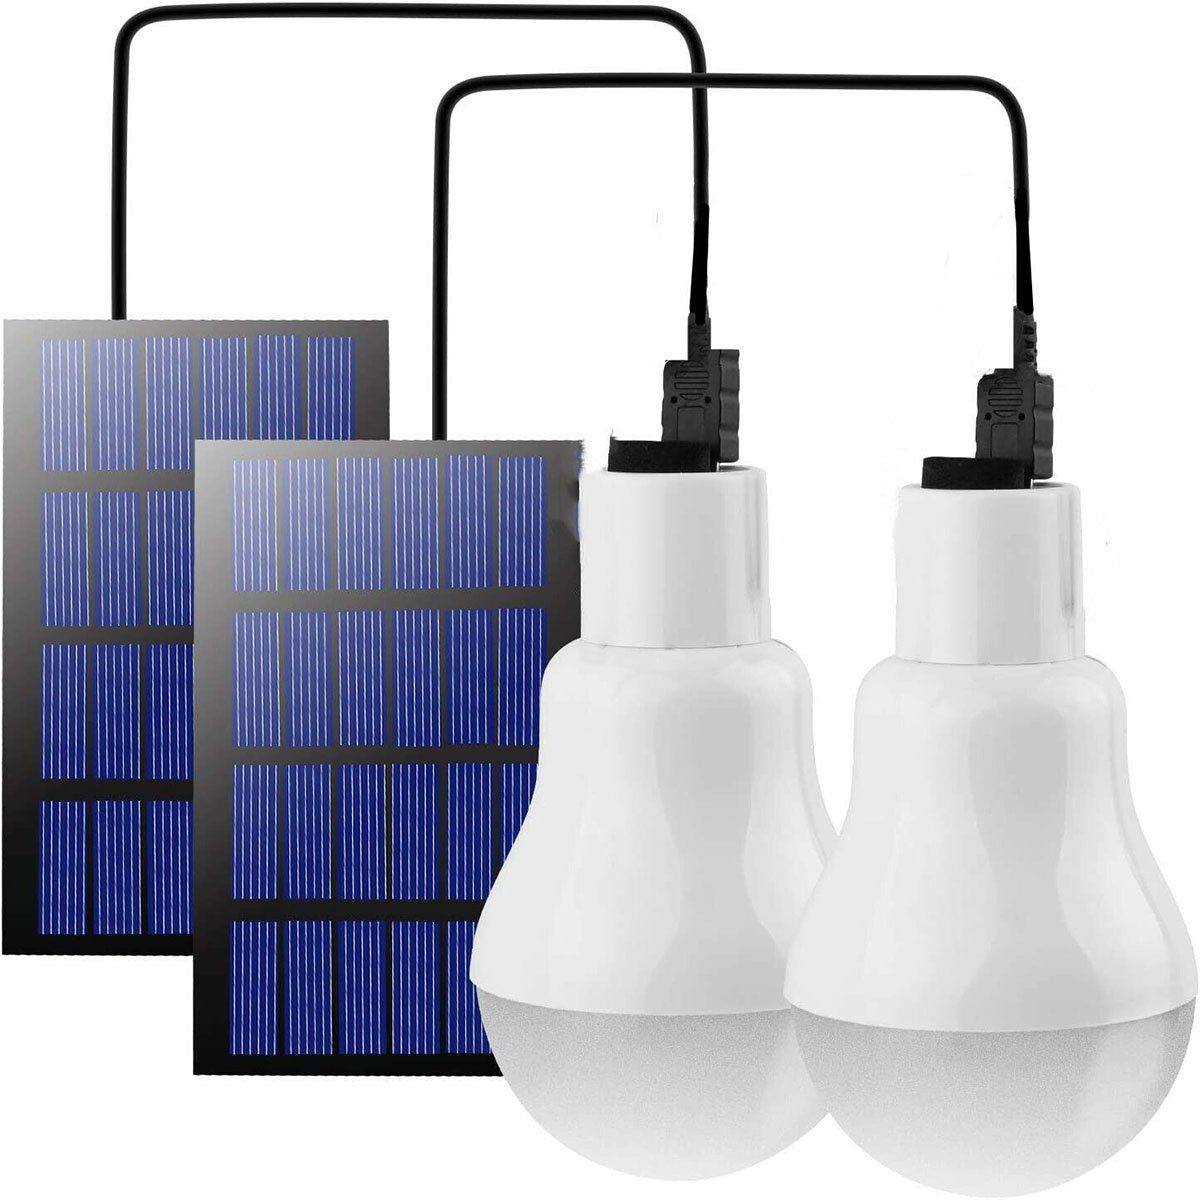 oyajia LED Solarleuchte Außenbeleuchtung 3.5m LED mit 2x 600LM Glühbirne, Hängeleuchte, Camping, Lampe Lampe 3W Solar für LED Campinglampe, Wandern, Birne Tragbare LED Tageslichtweiß, Ladekabel, LED Solarleuchte Angeln fest Solar integriert